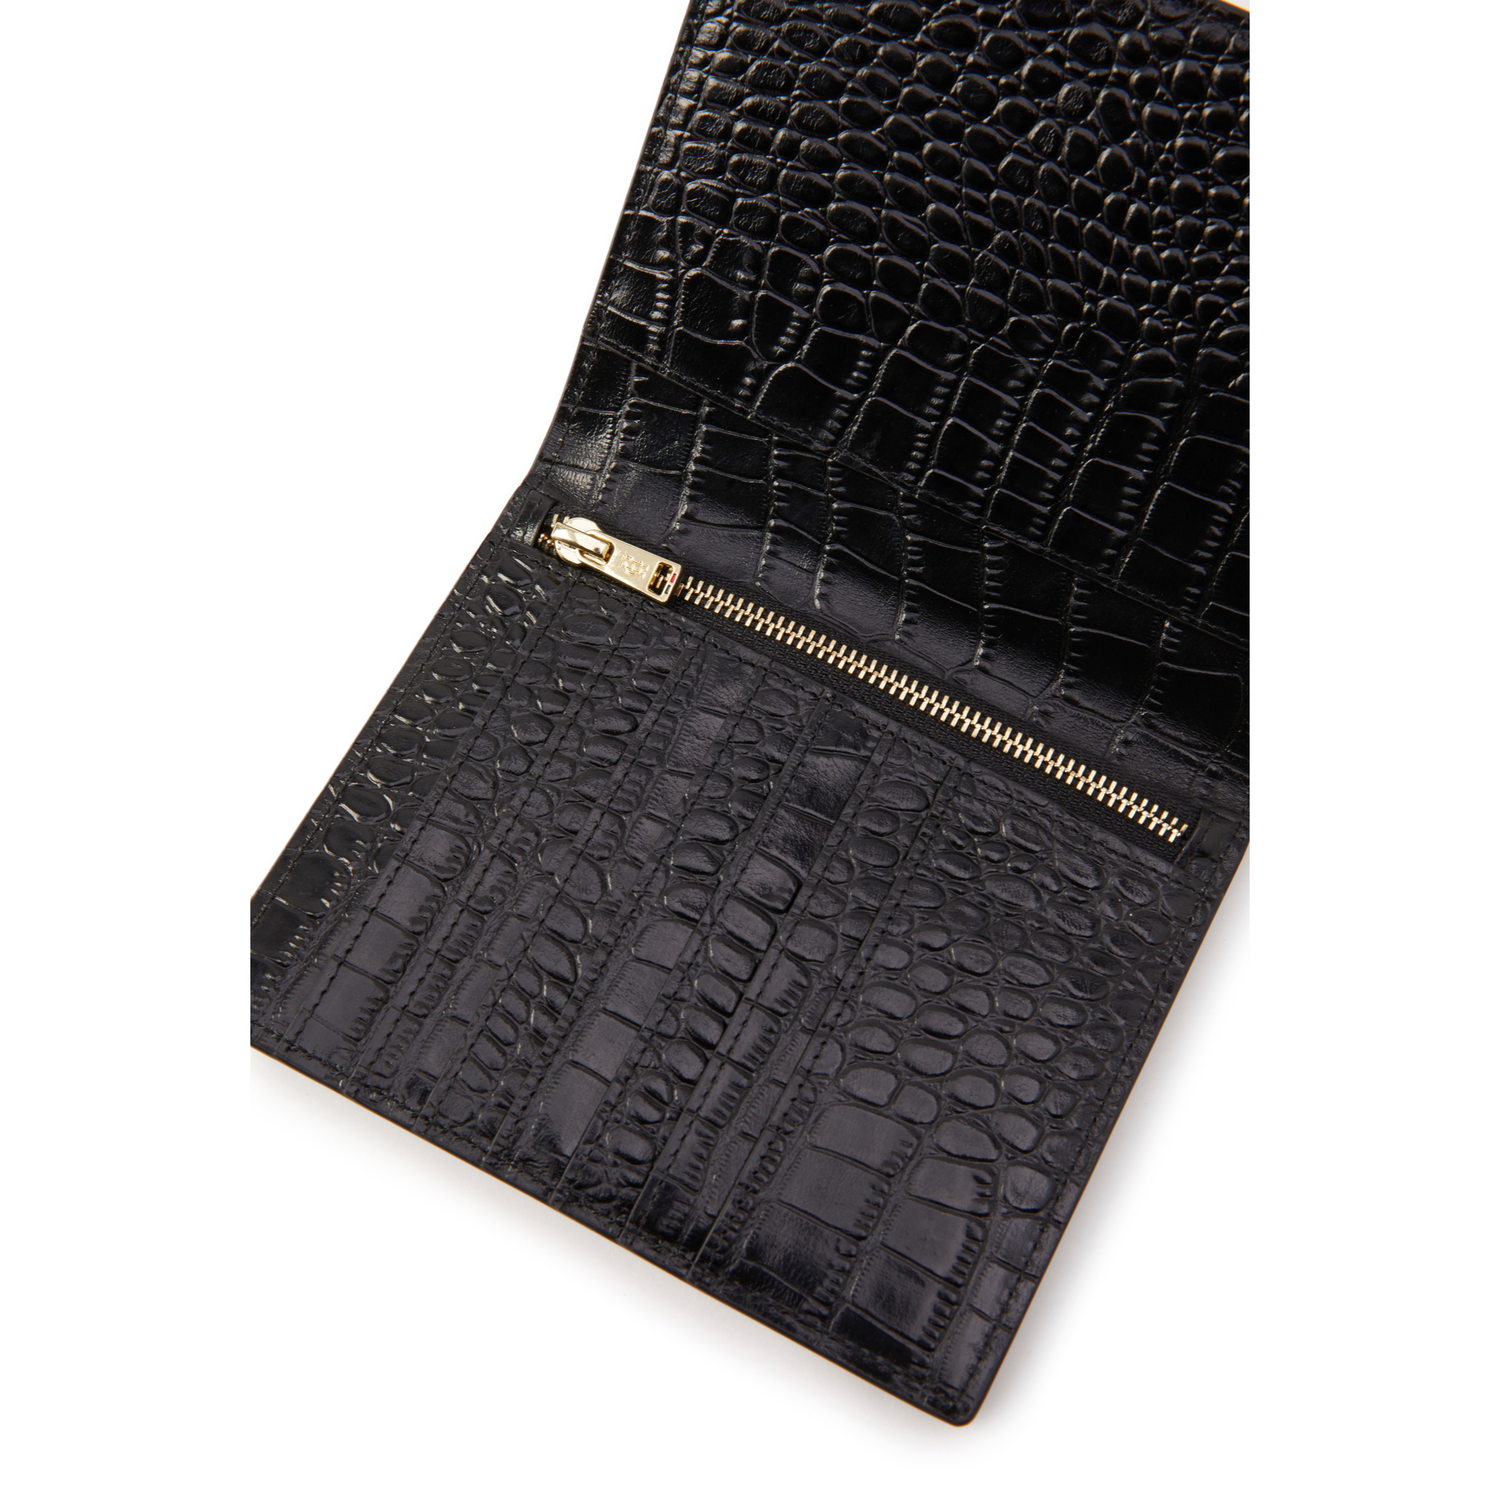 Chelsea Wallet Black Croc